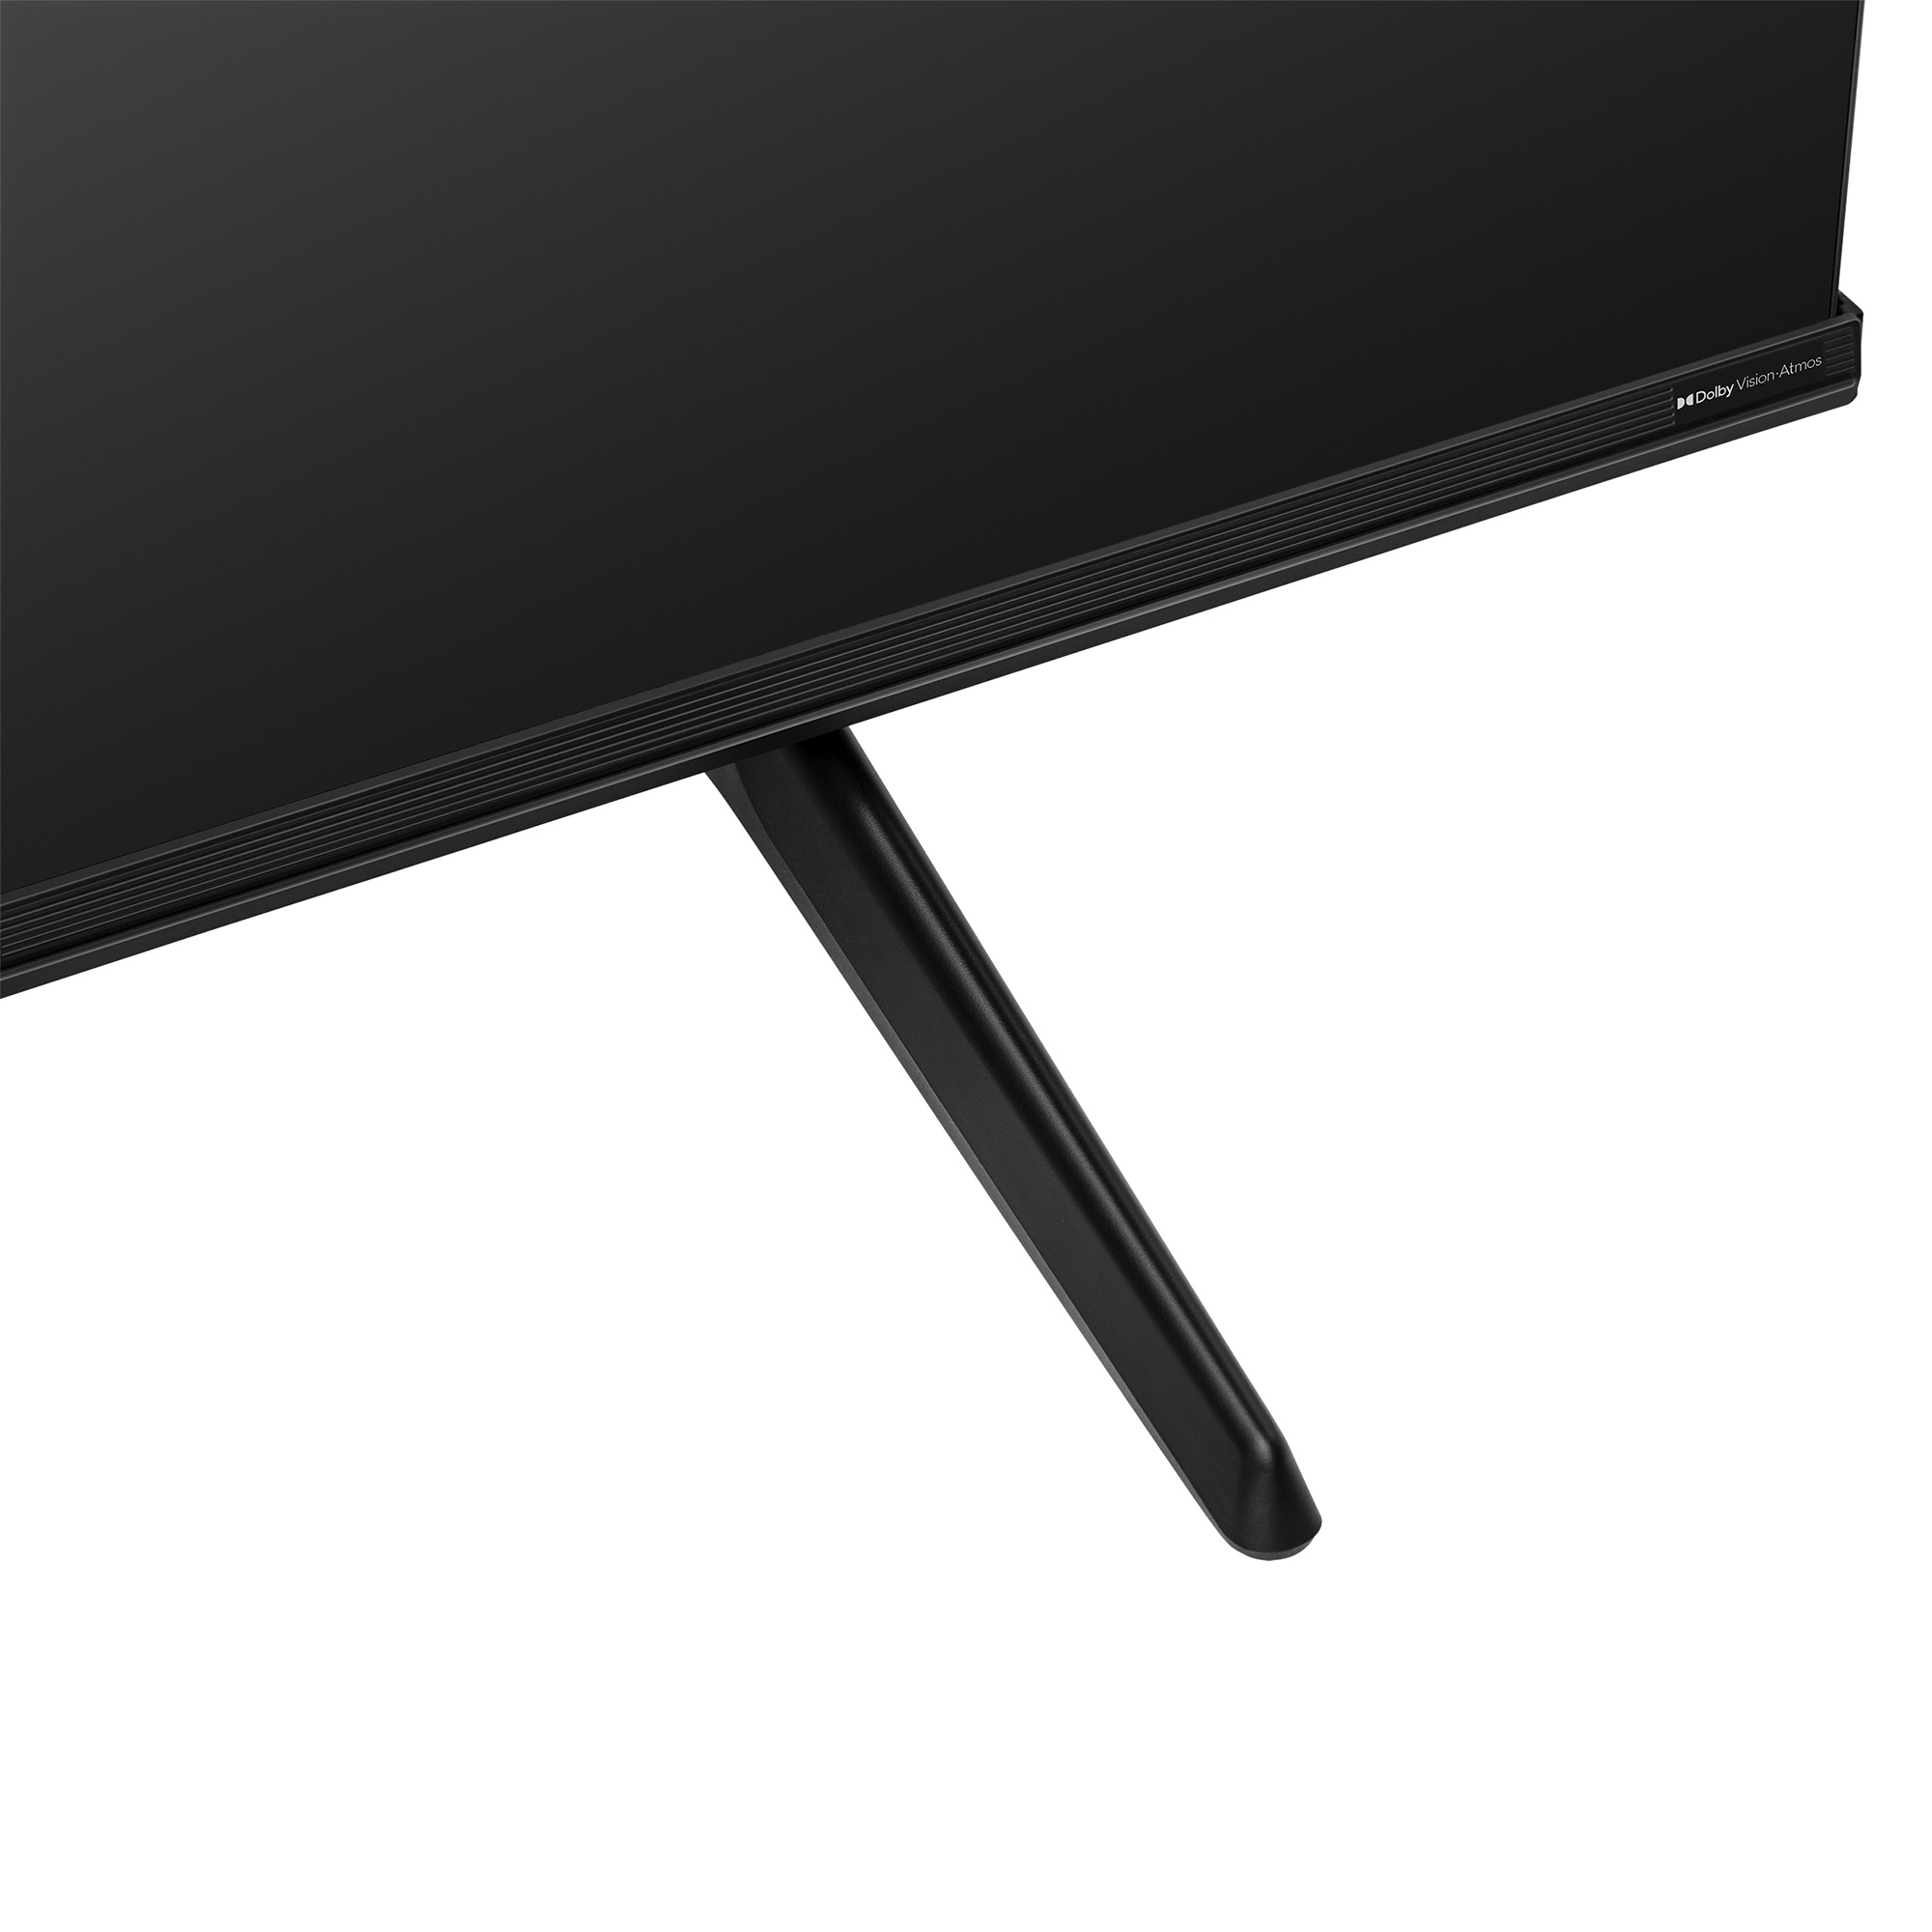 HISENSE 50E7KQ QLED TV 125,7 / (Flat, QLED cm, Zoll 50 4K)